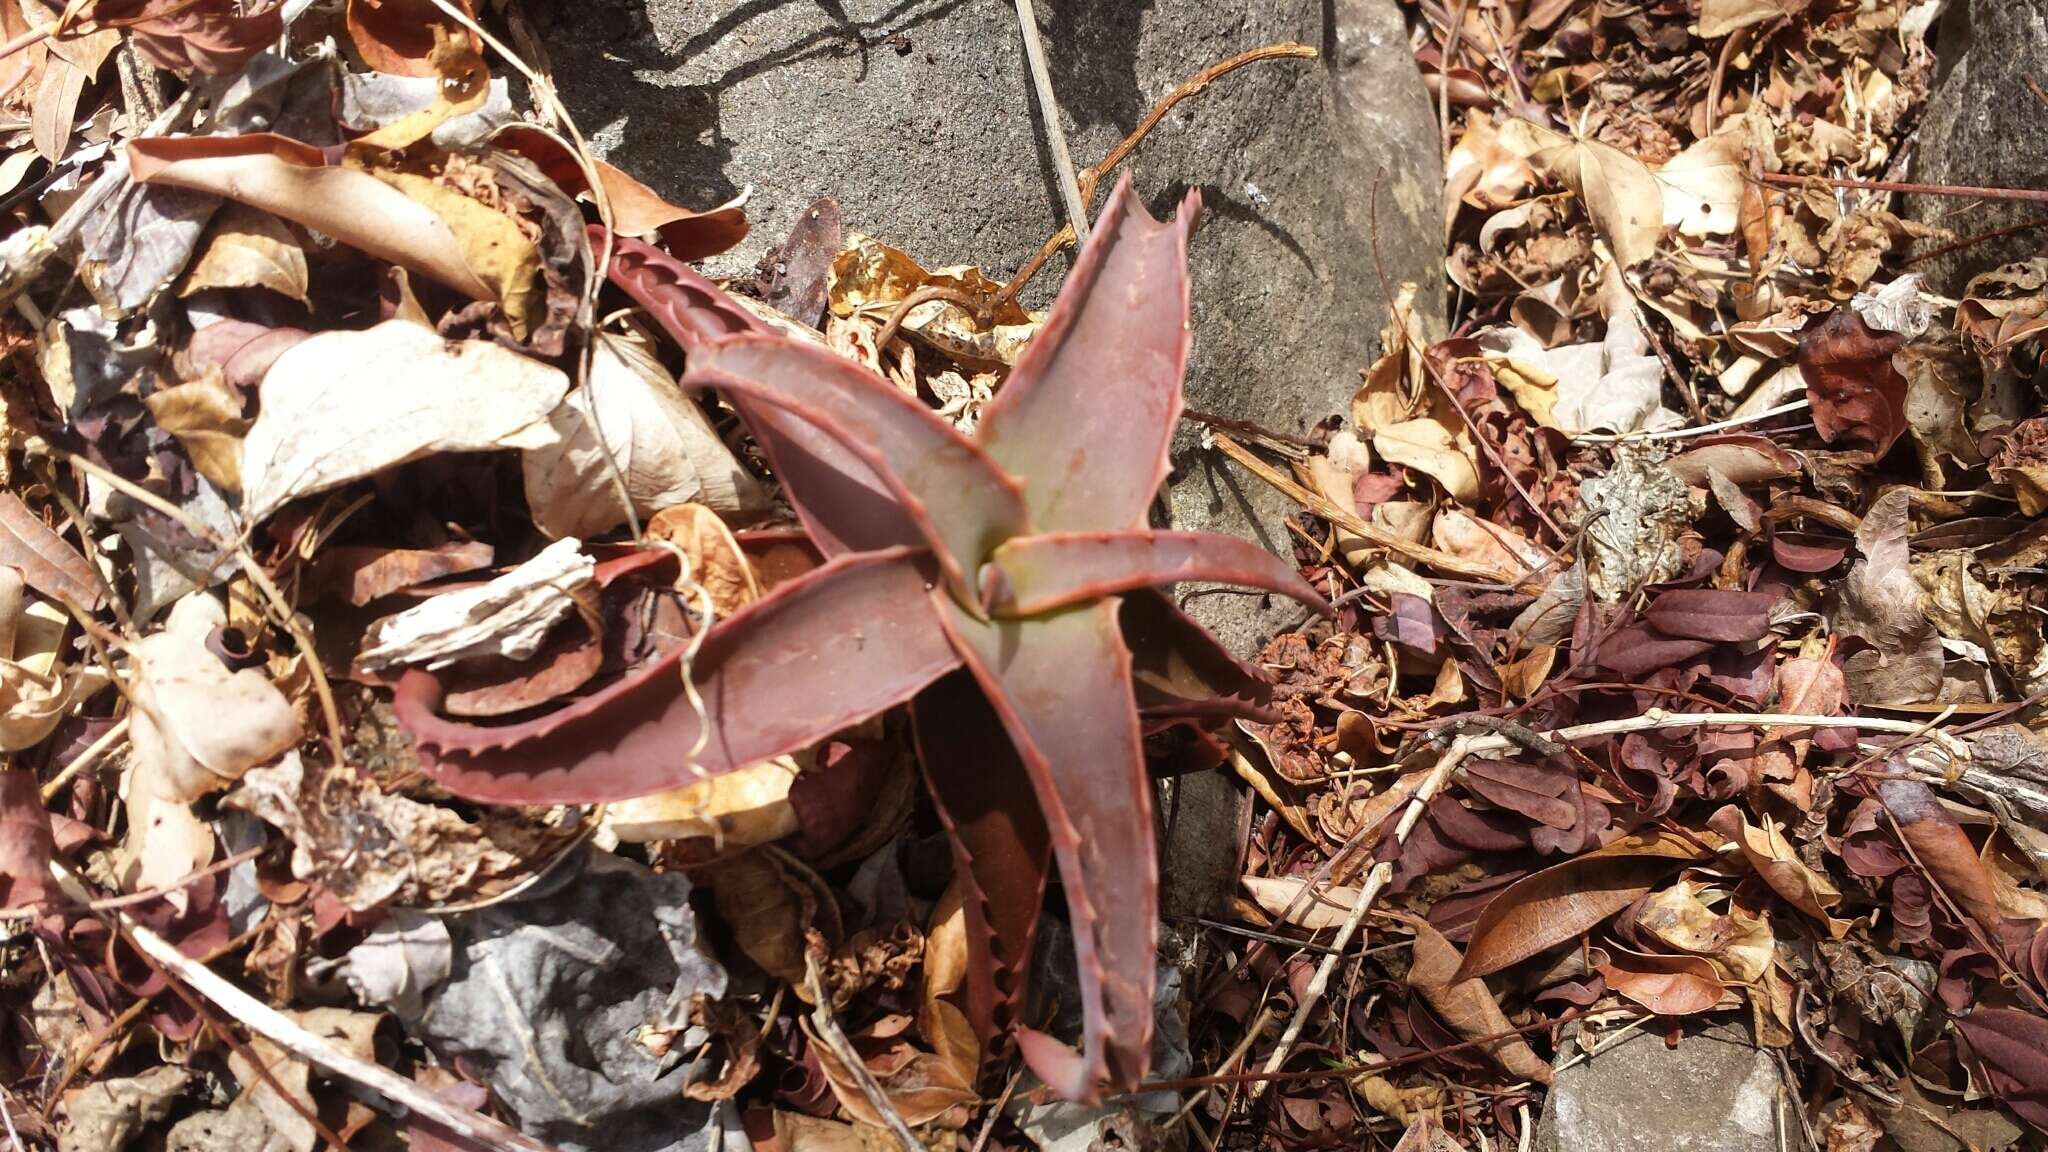 Image de Aloe suarezensis H. Perrier